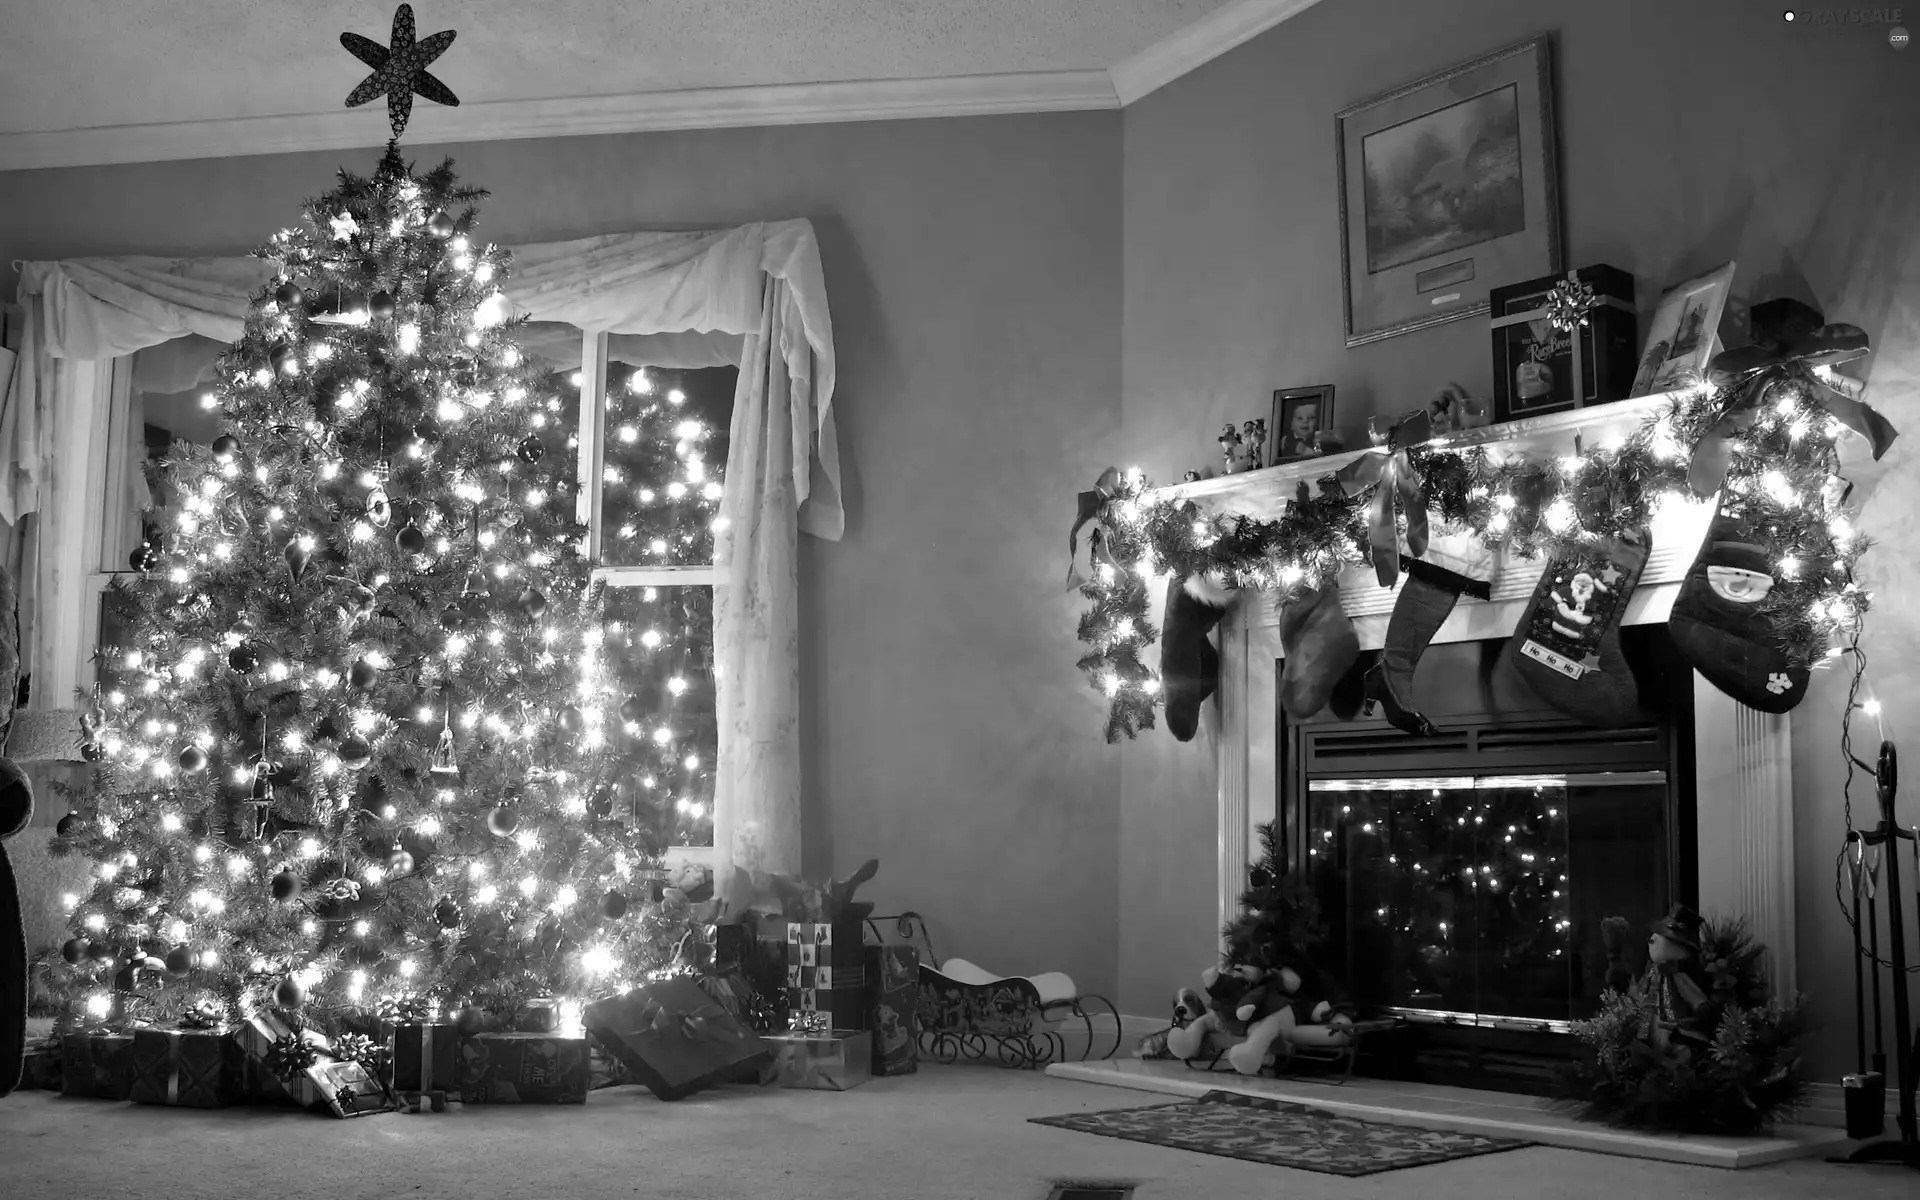 socks, Lights, burner chimney, gifts, christmas tree